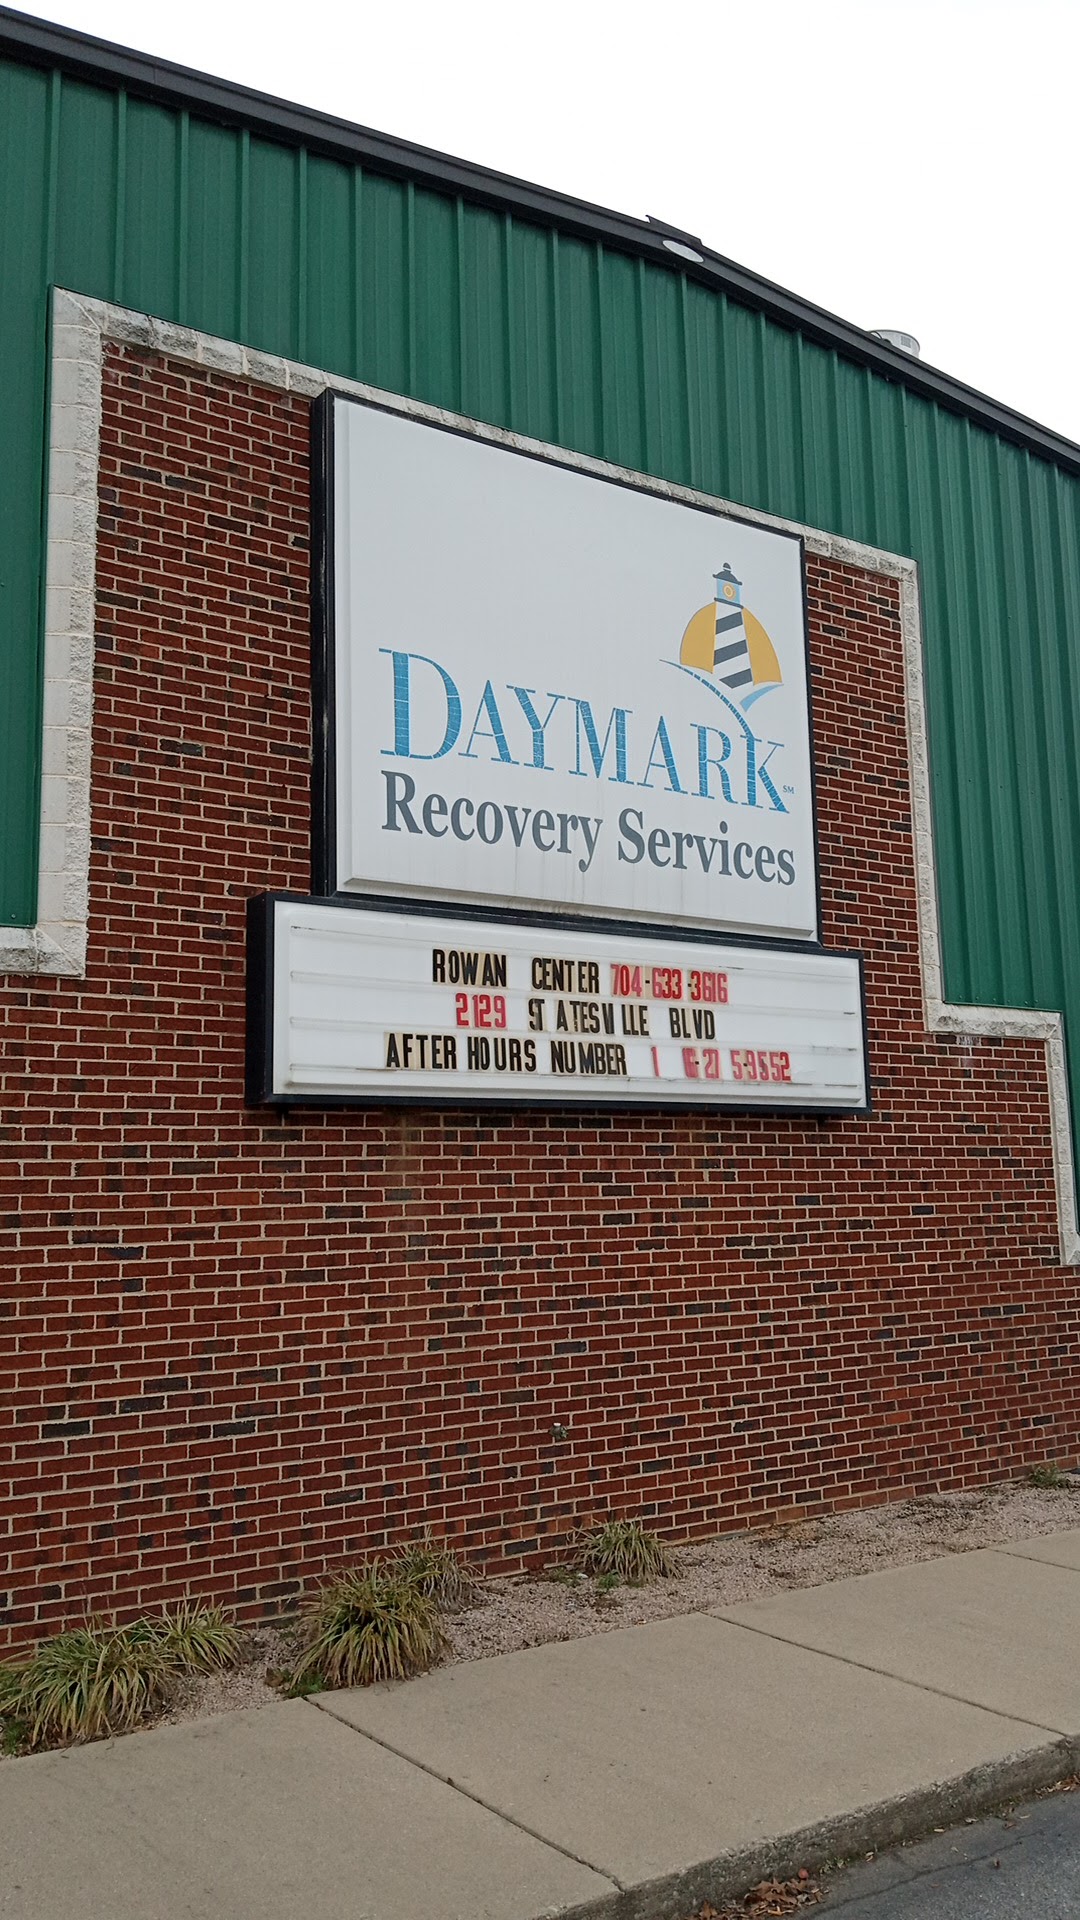 Daymark Recovery Services - Rowan Center